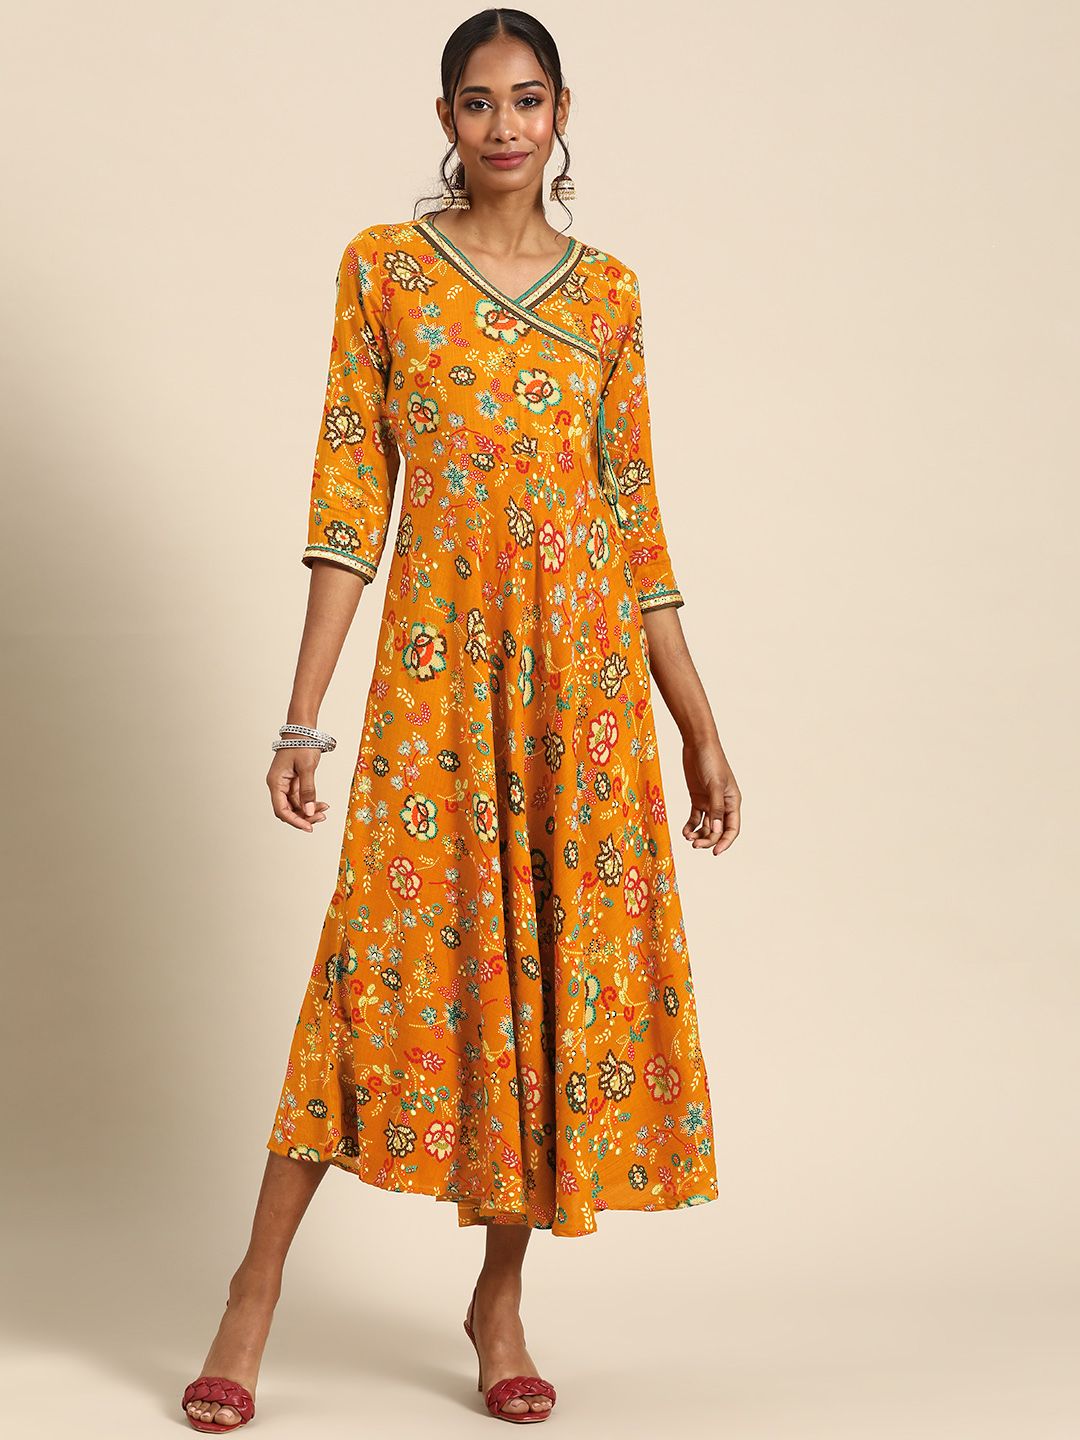 RANGMAYEE Mustard Yellow & Green Floral Liva Ethnic A-Line Maxi Dress Price in India